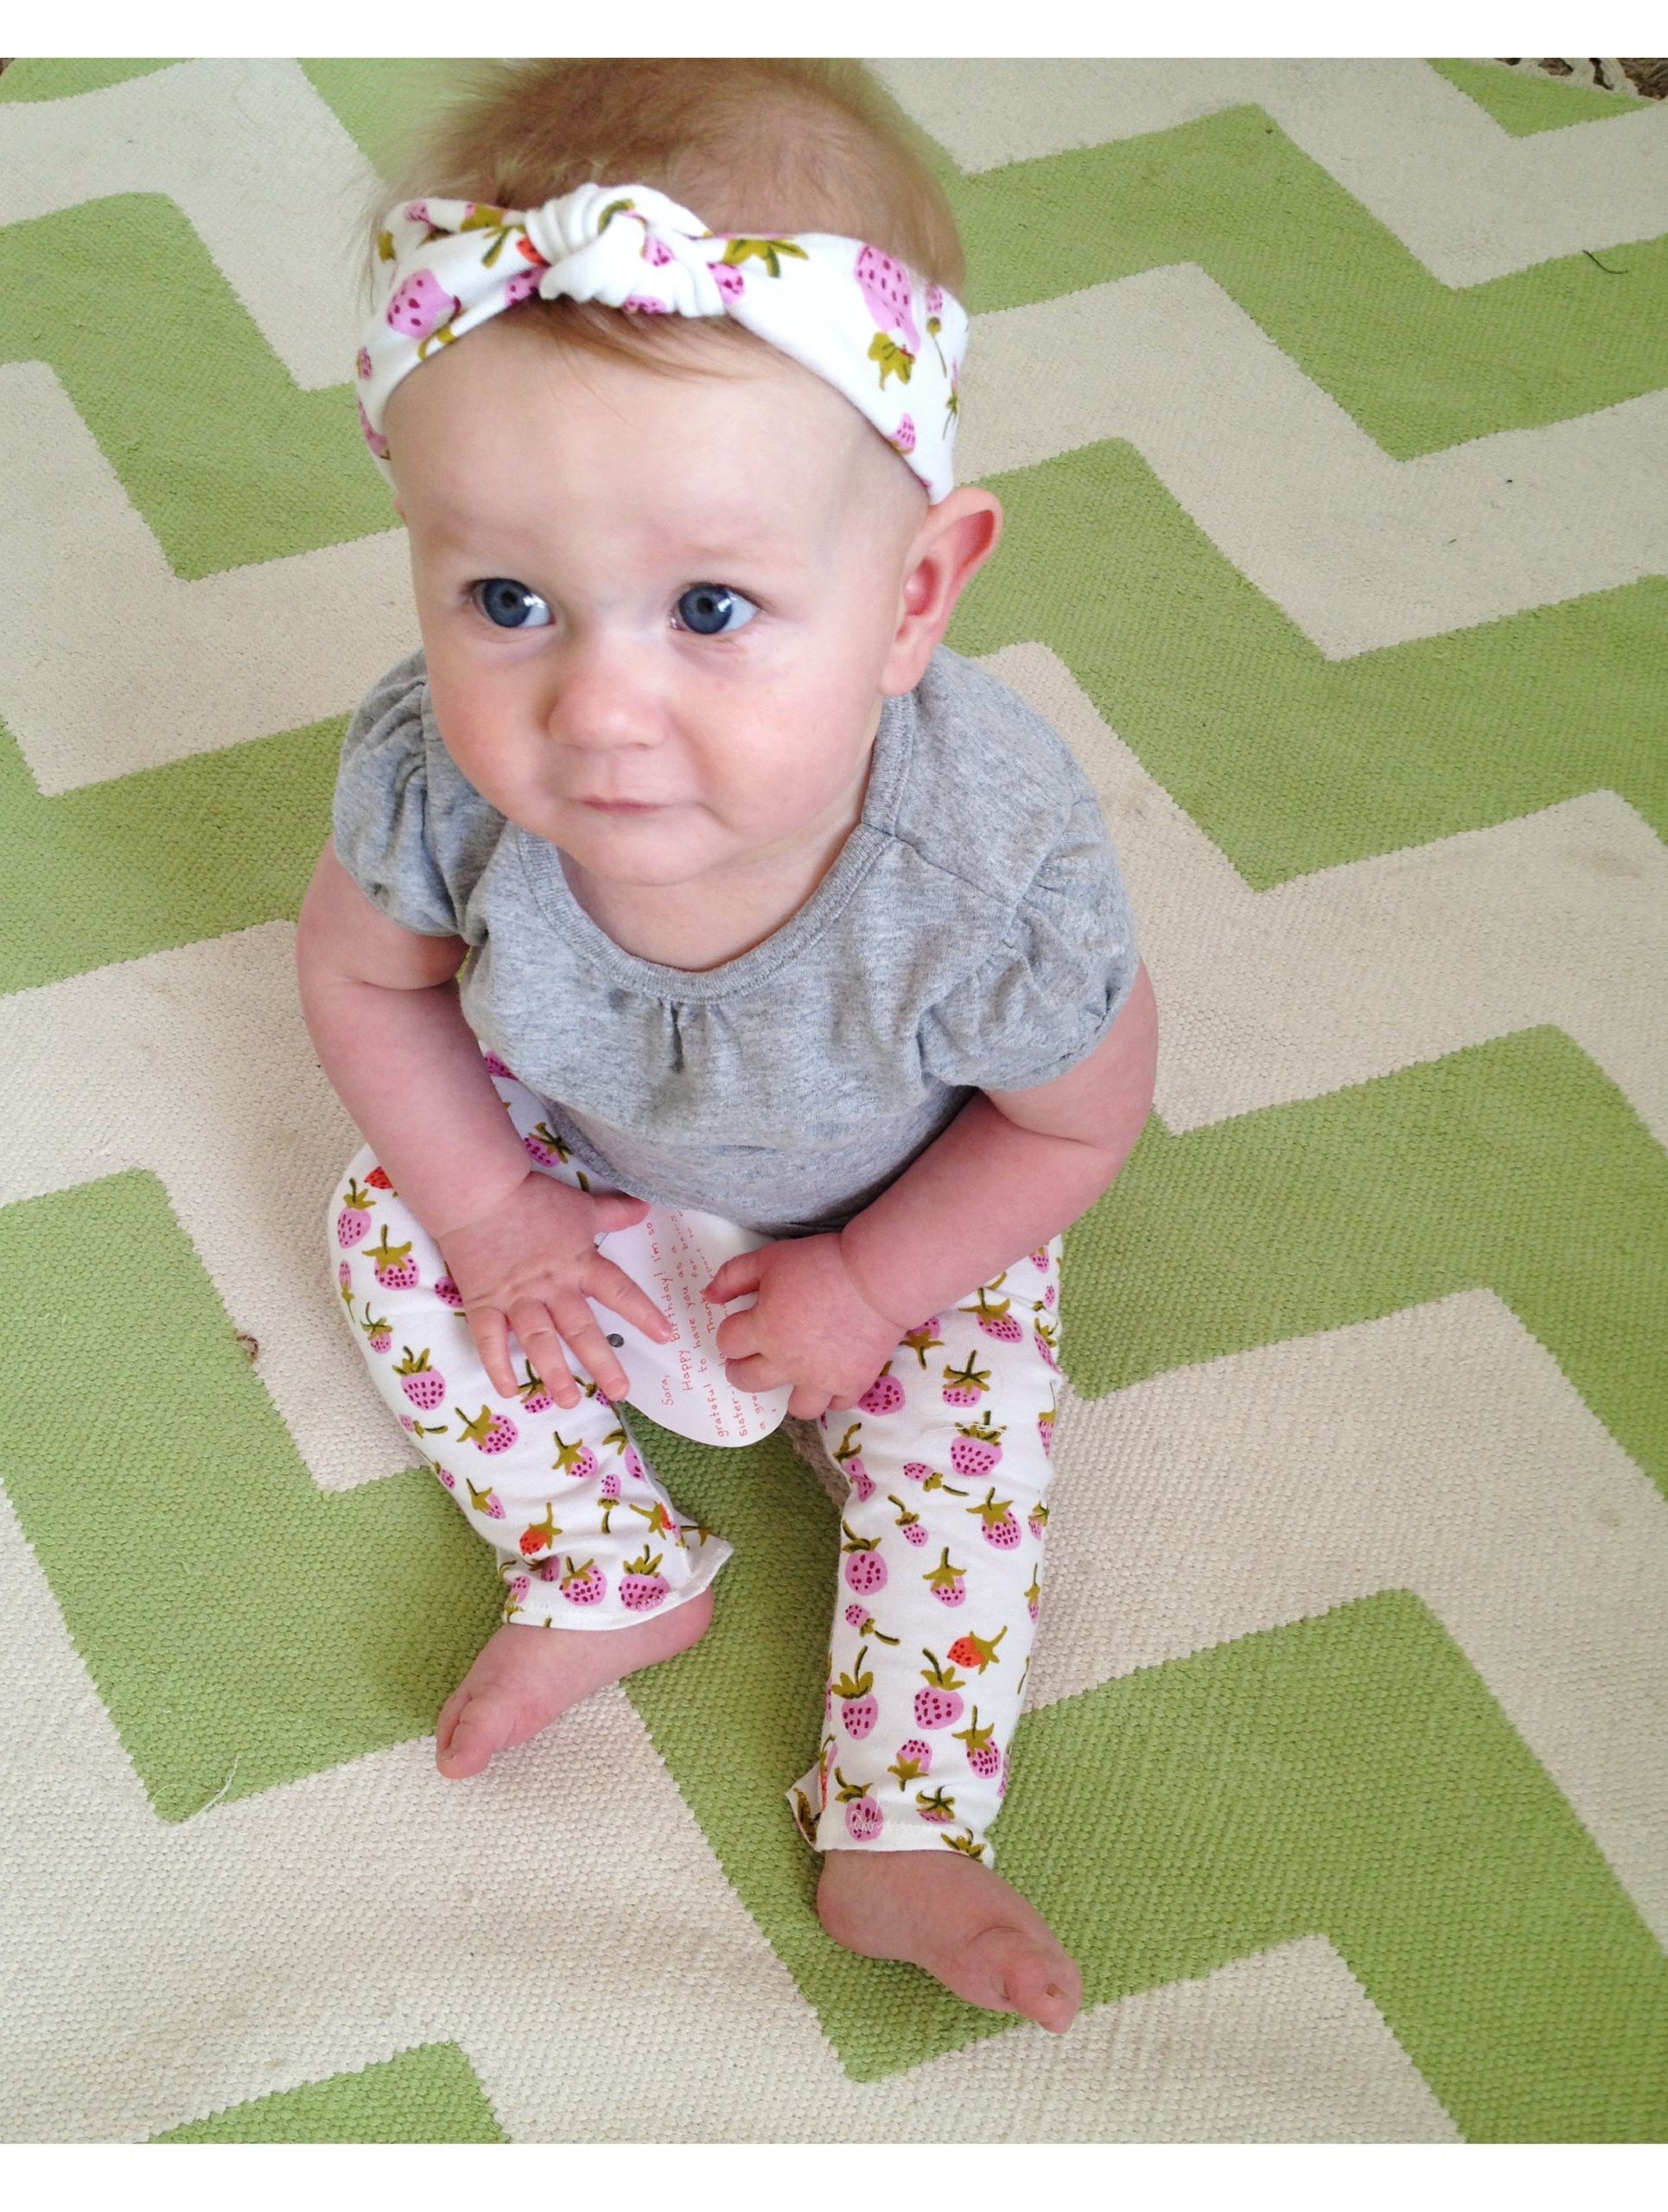 DIY Baby Turban Headbands
 Knotted Baby Turban Tutorial